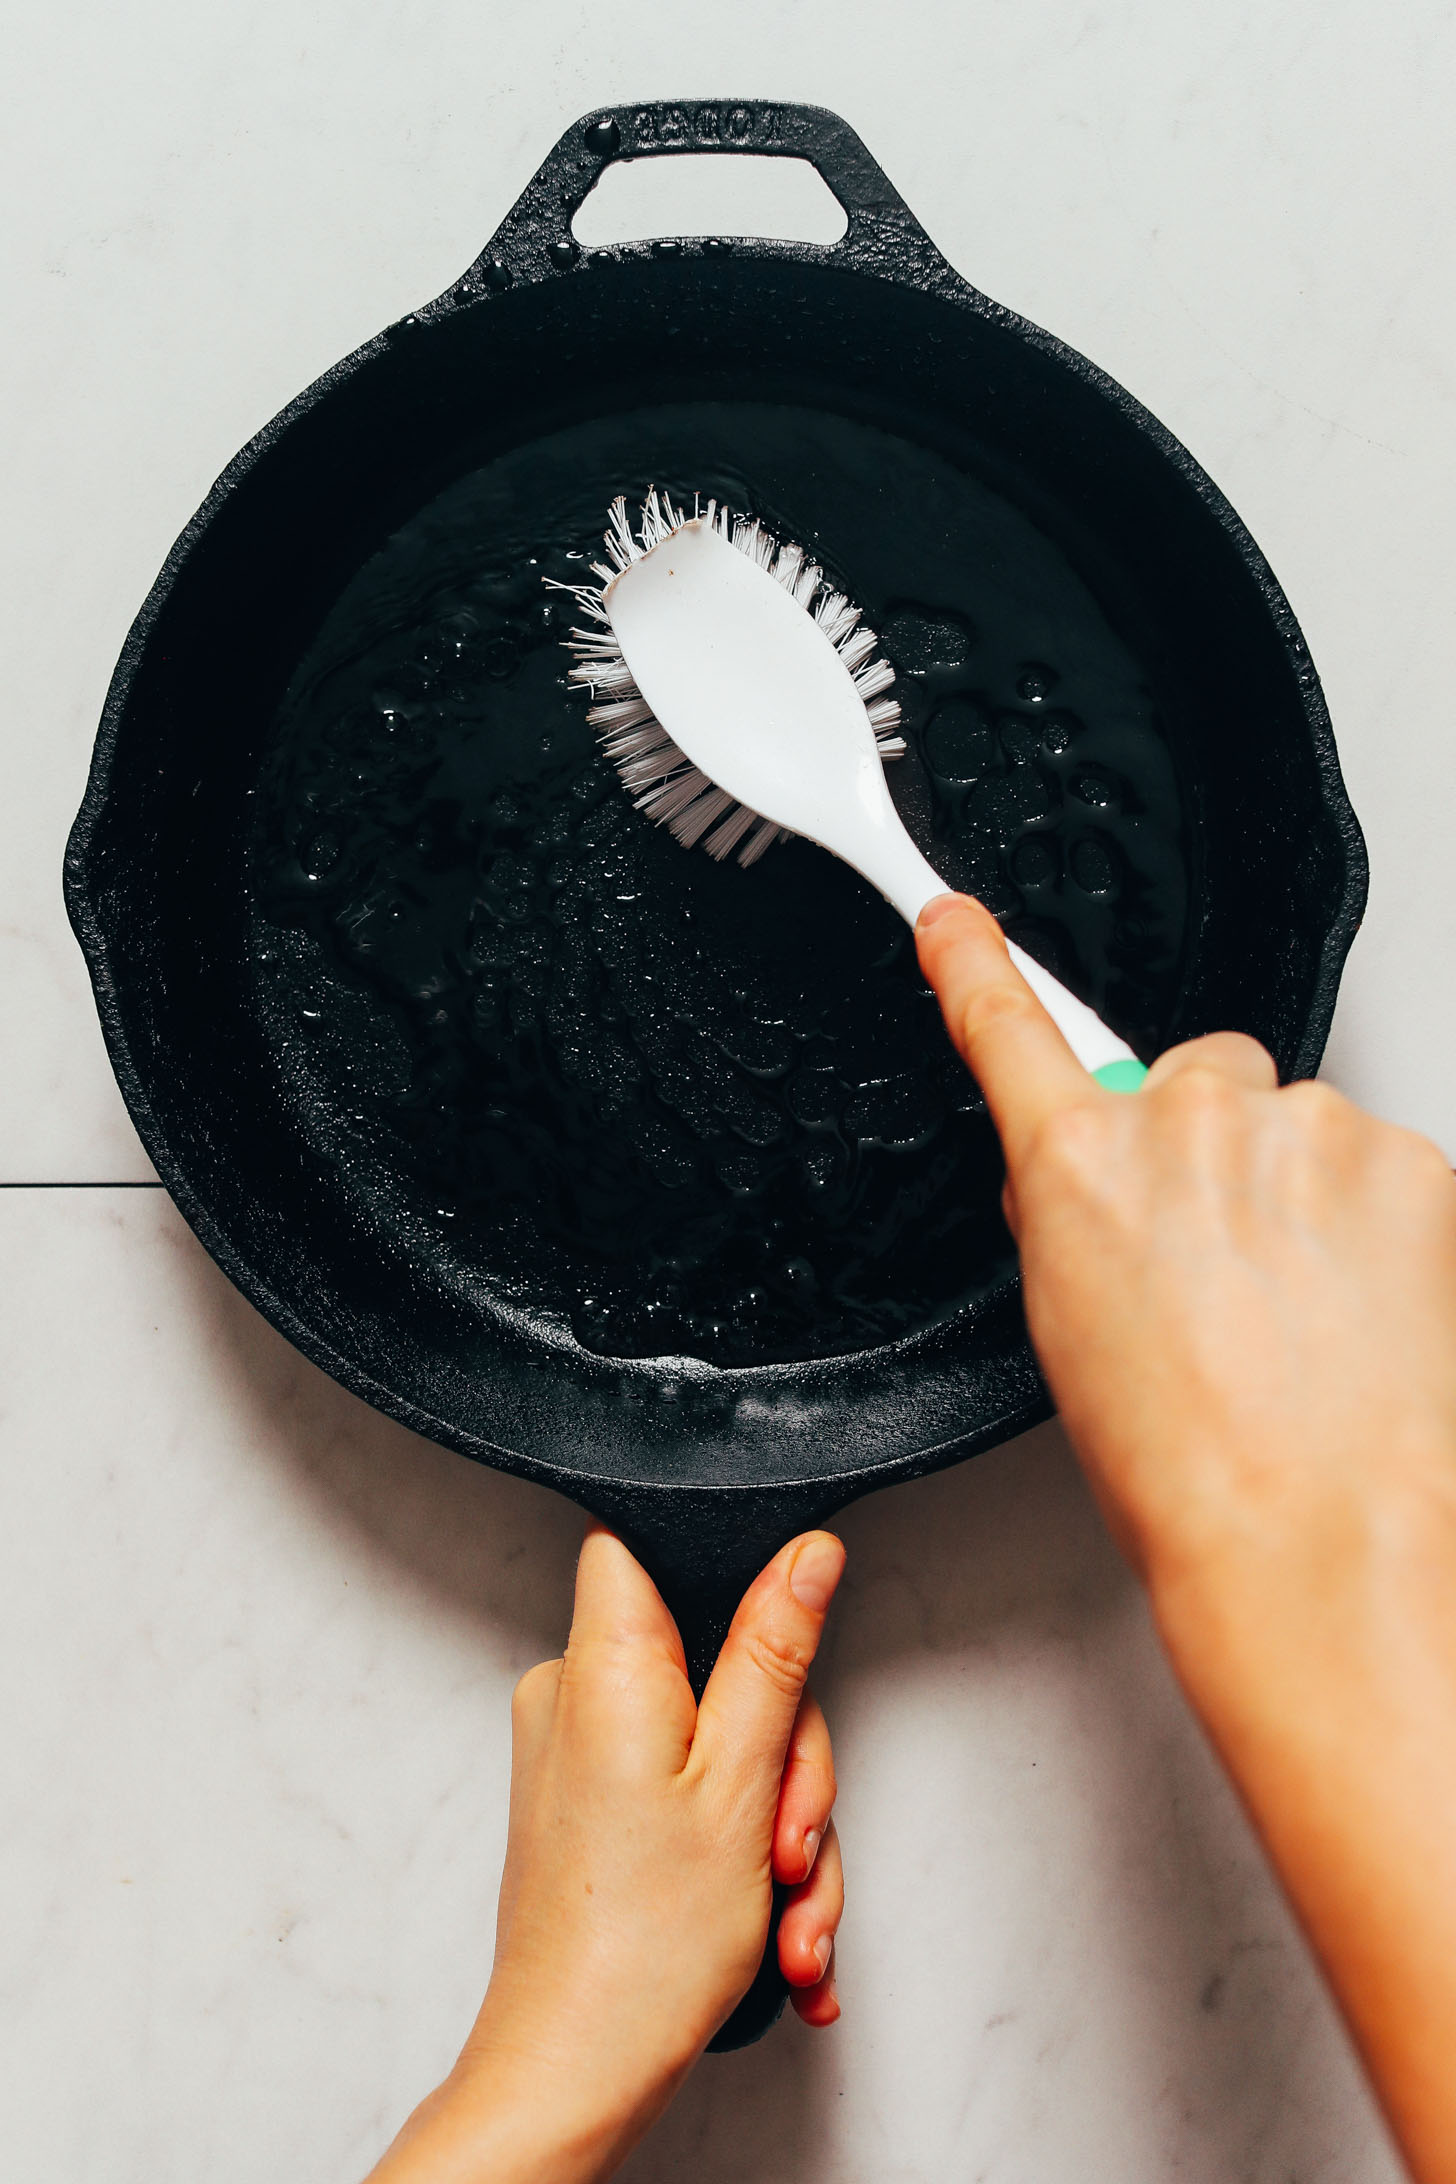 Using a scrub brush to clean a cast iron pan